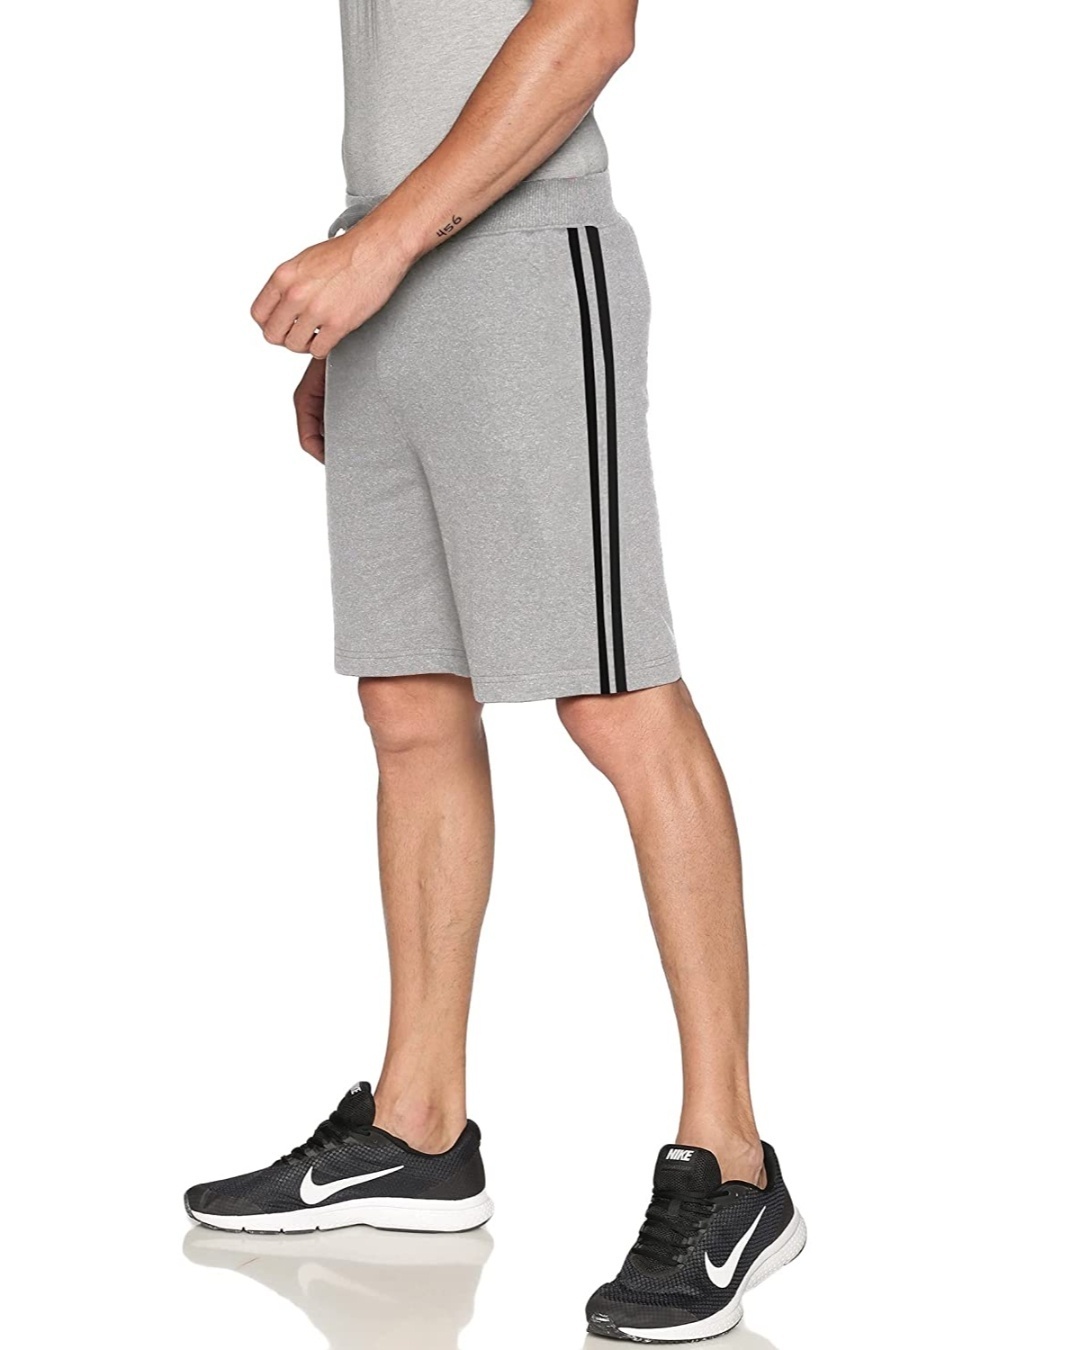 Shop Men's Grey Cotton Casual Short with Zipper Pocket-Design